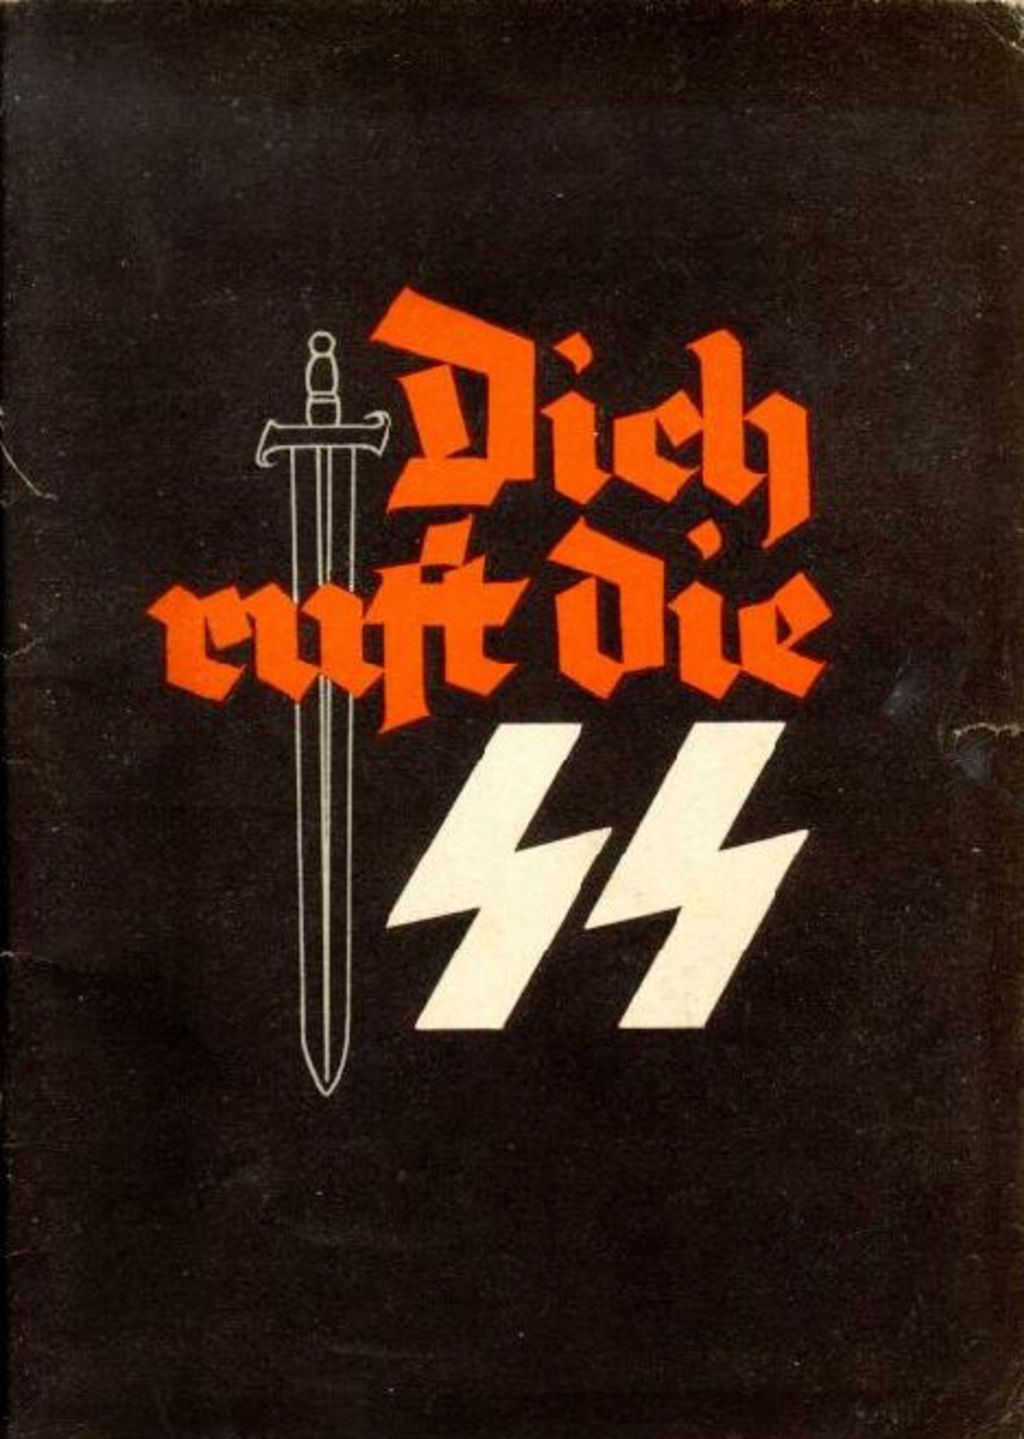 Exponat: Werbeschrift: "Dich ruft die SS", um 1942